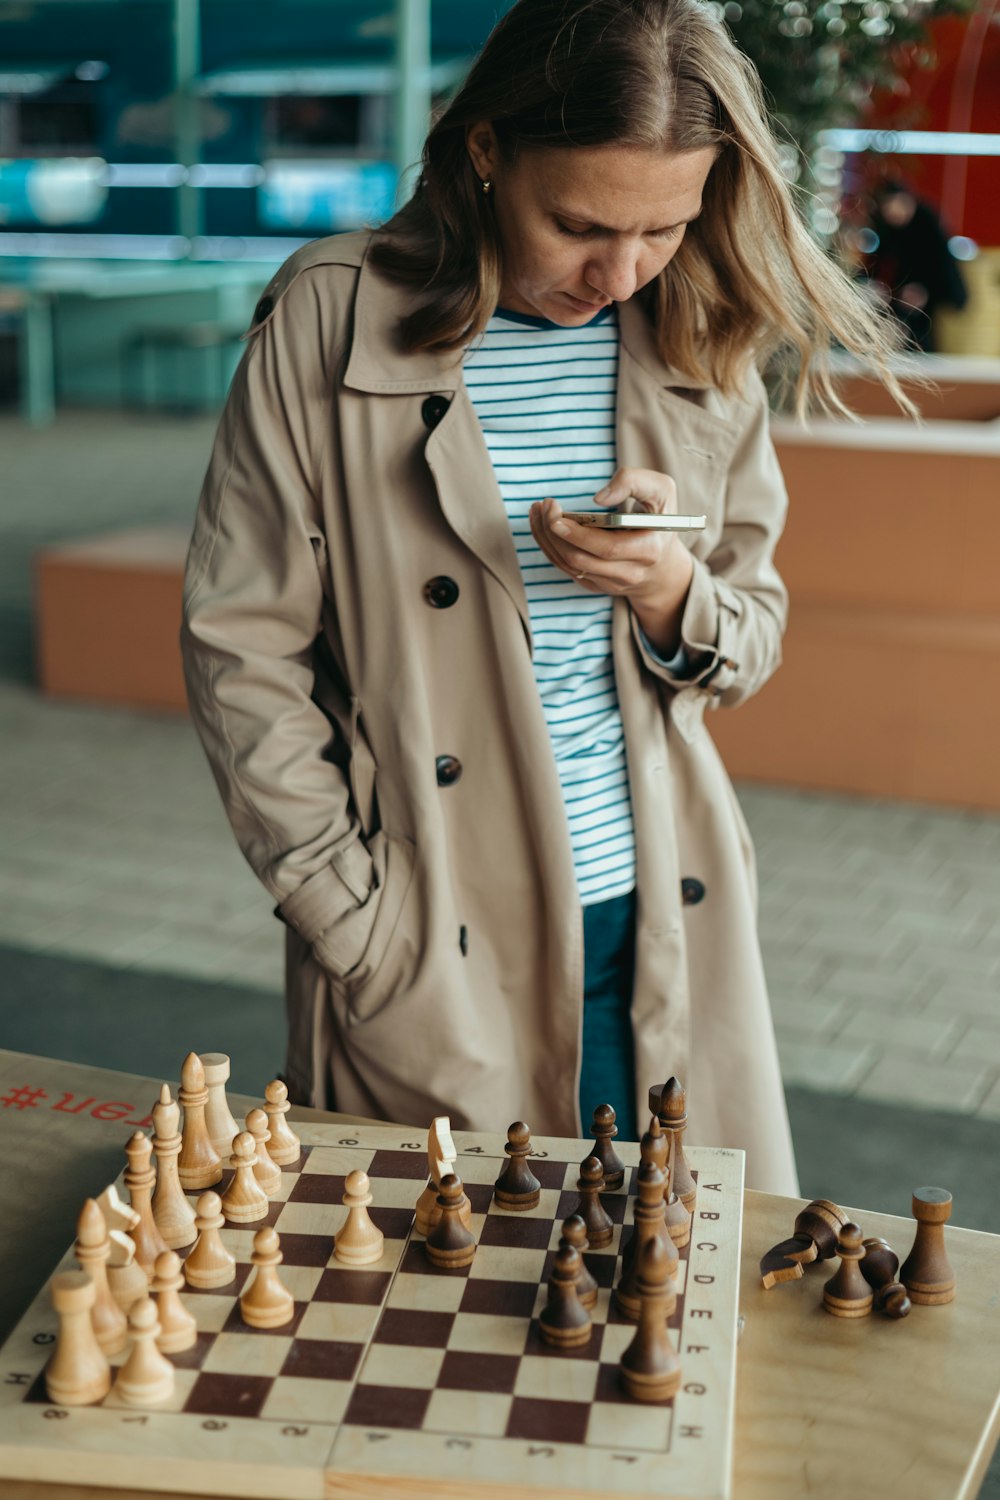 a woman playing chess